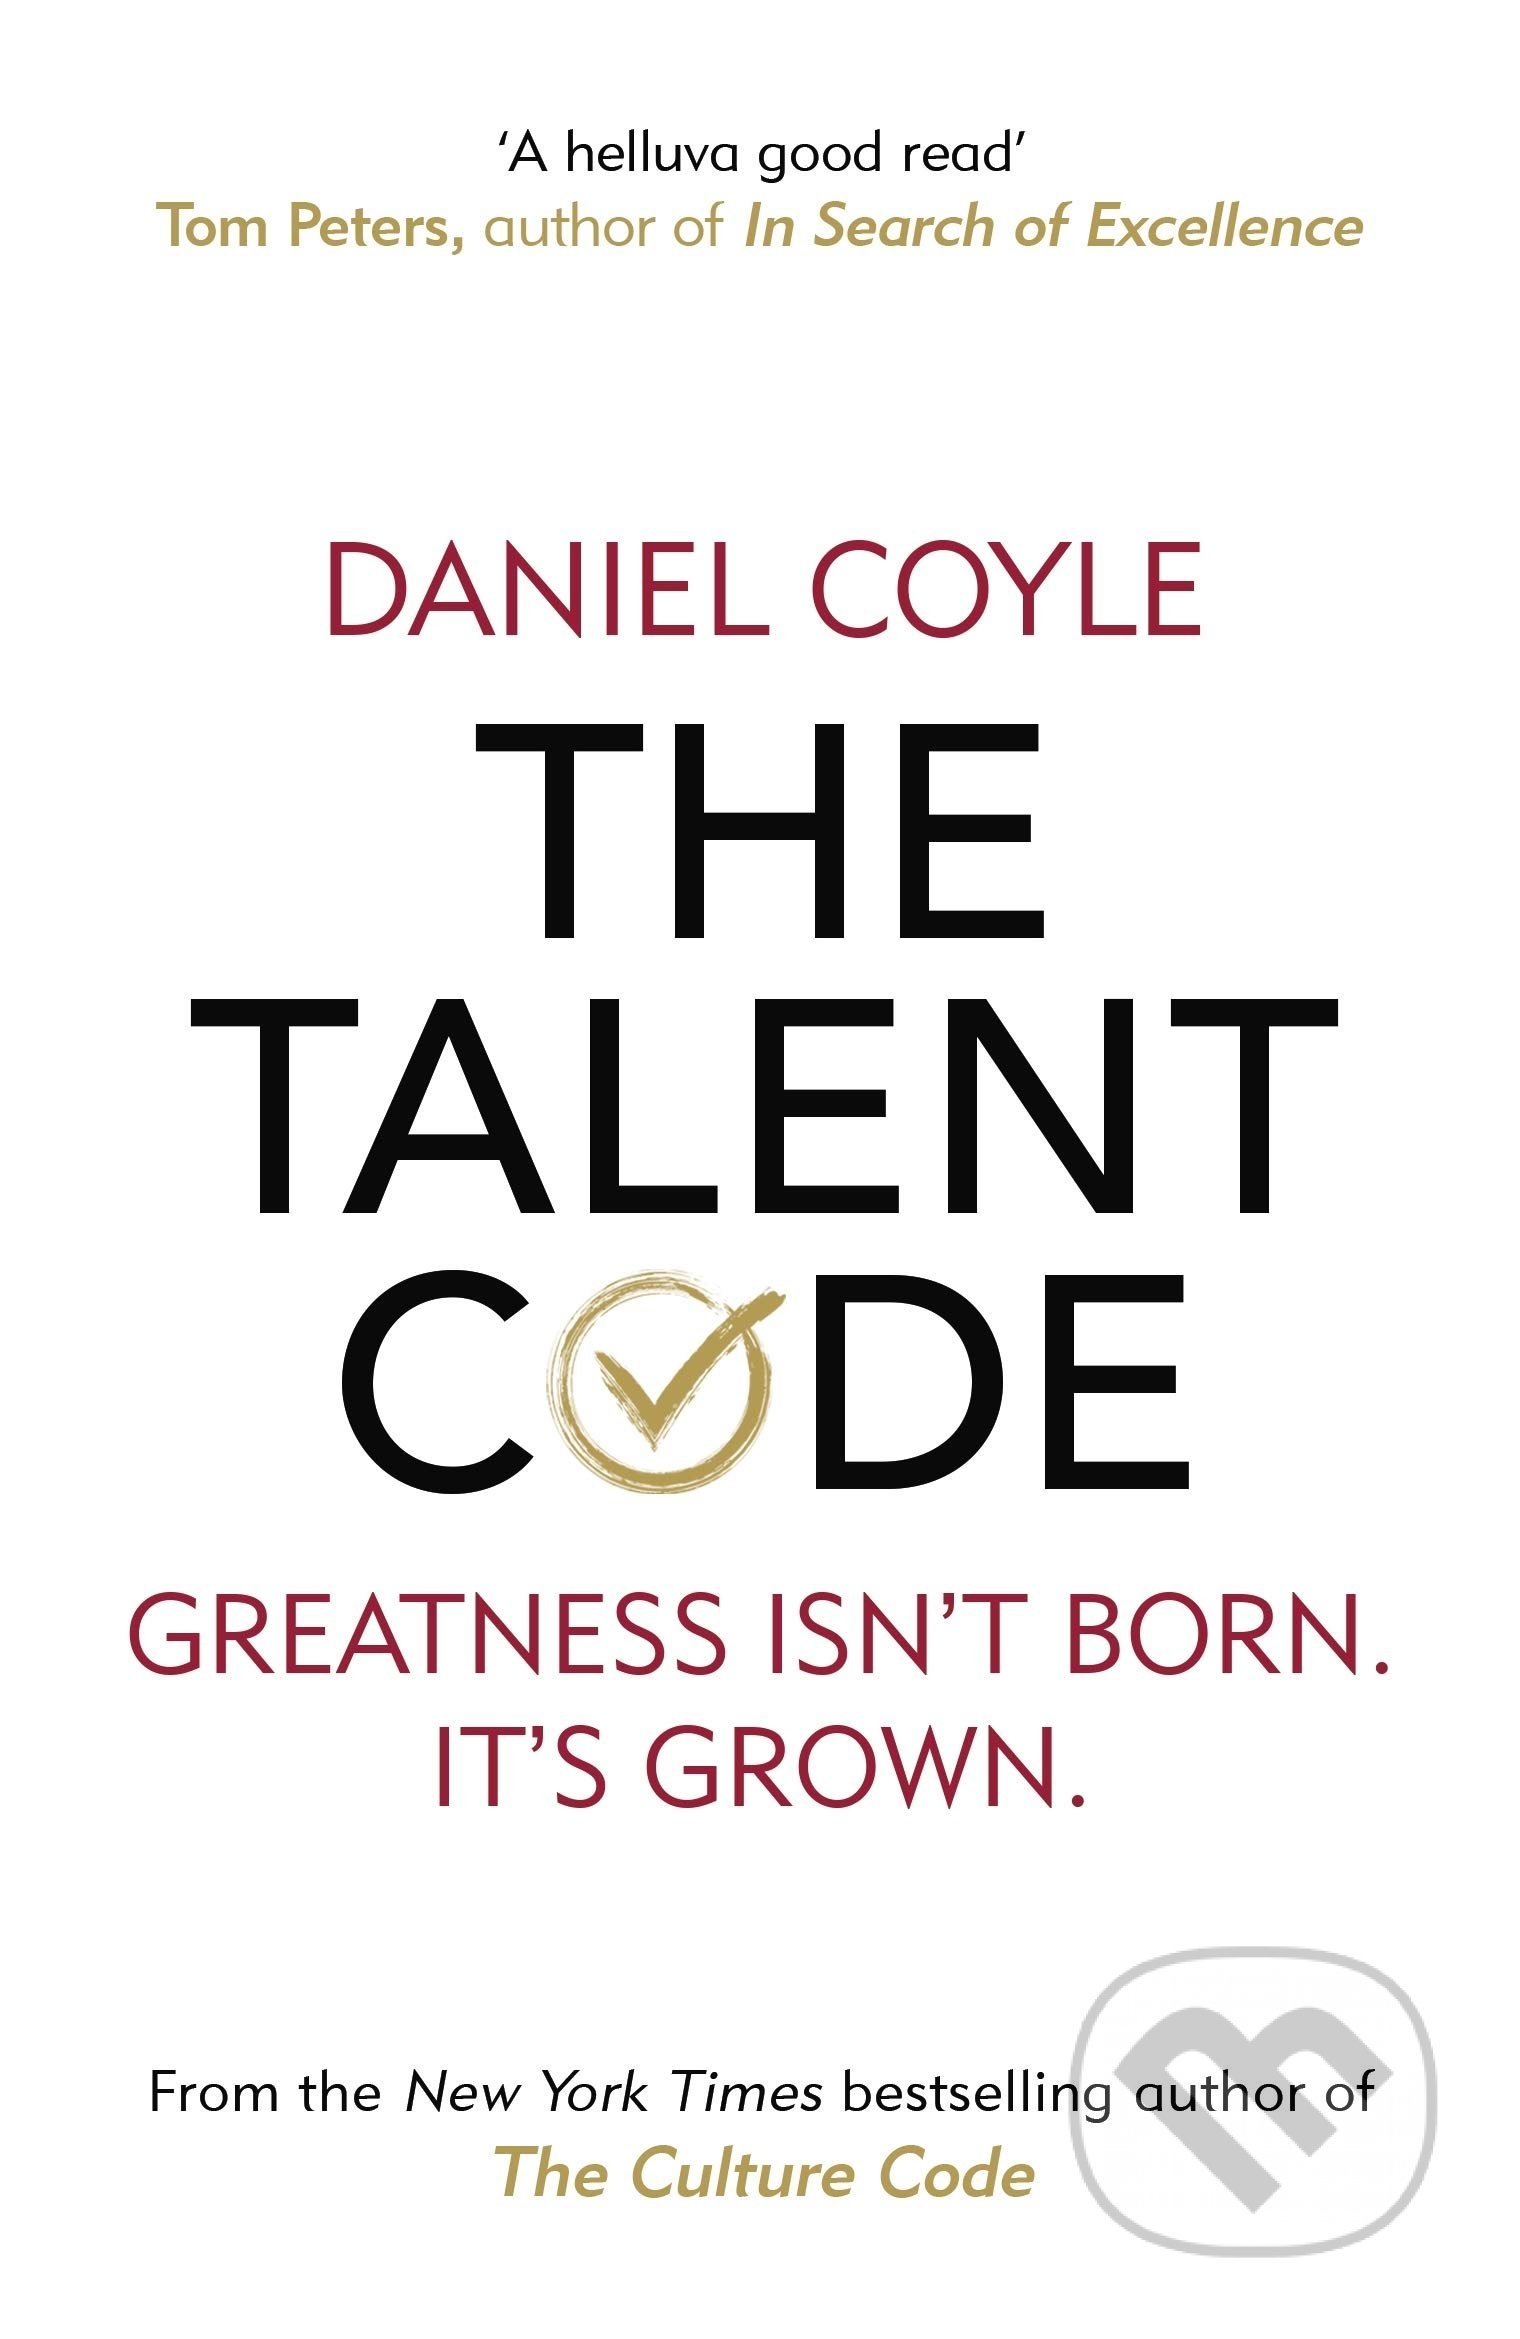 The Talent Code - Daniel Coyle, Random House, 2020